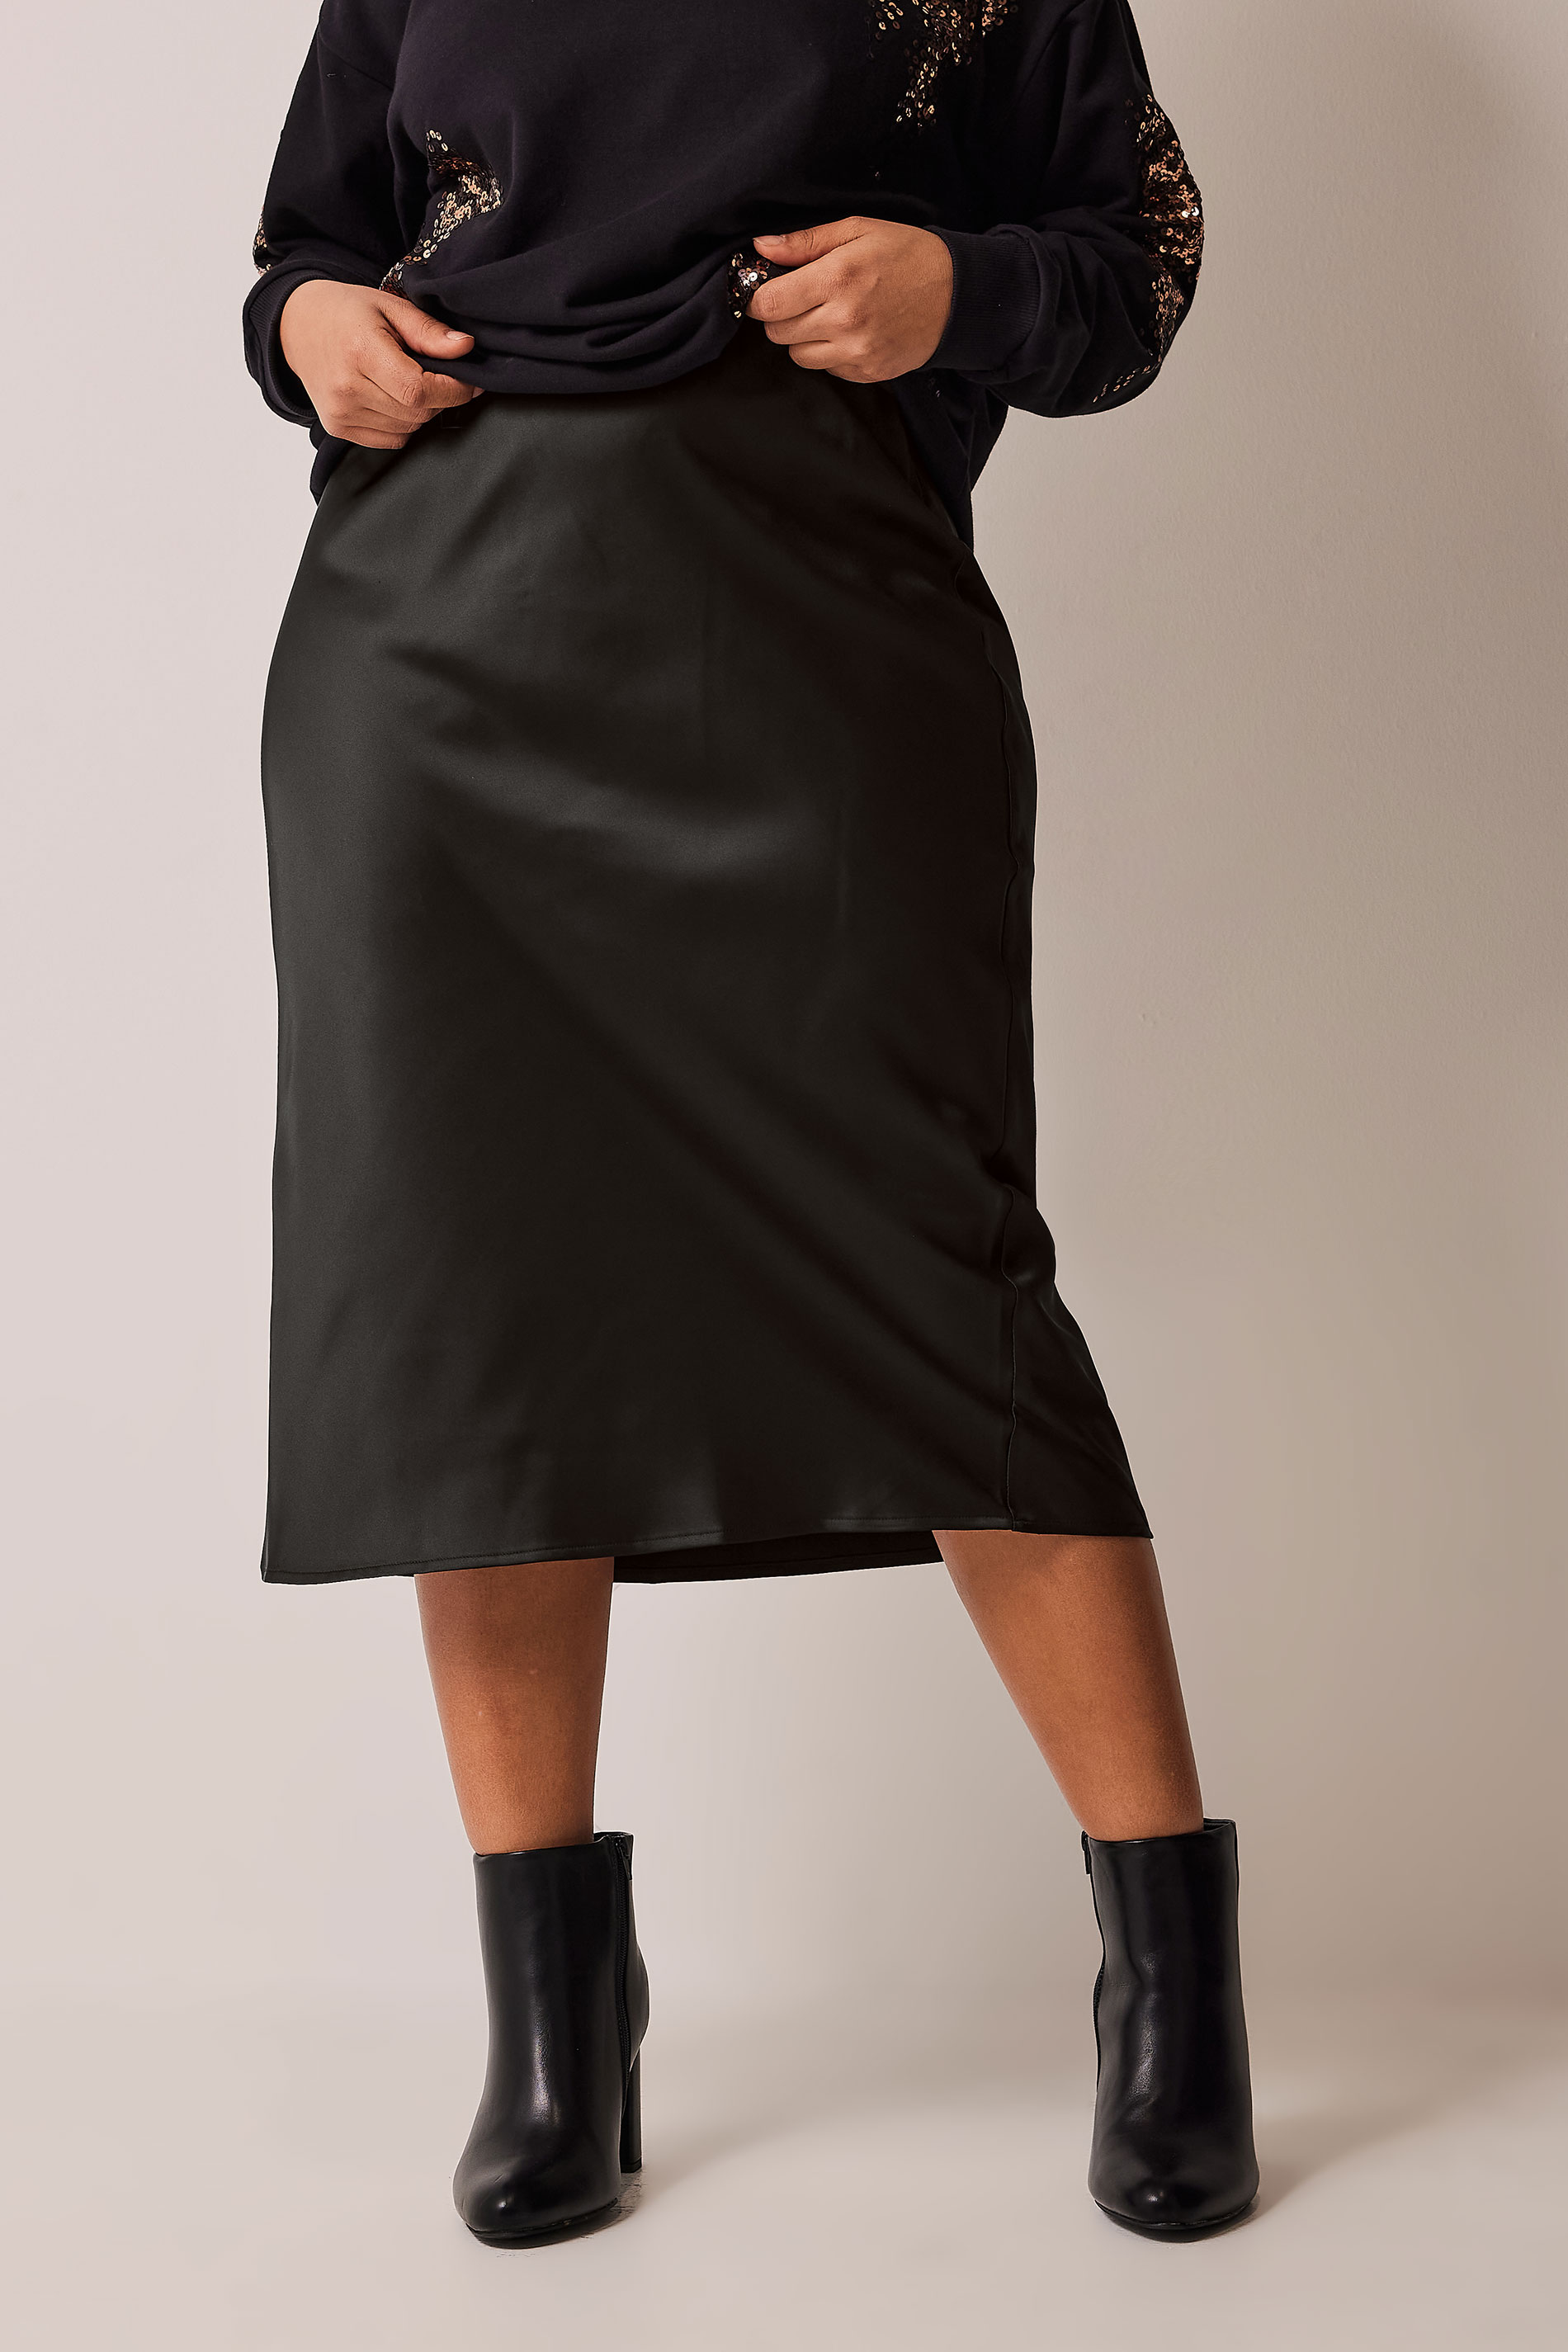 EVANS Plus Size Black Midi Satin Skirt  1